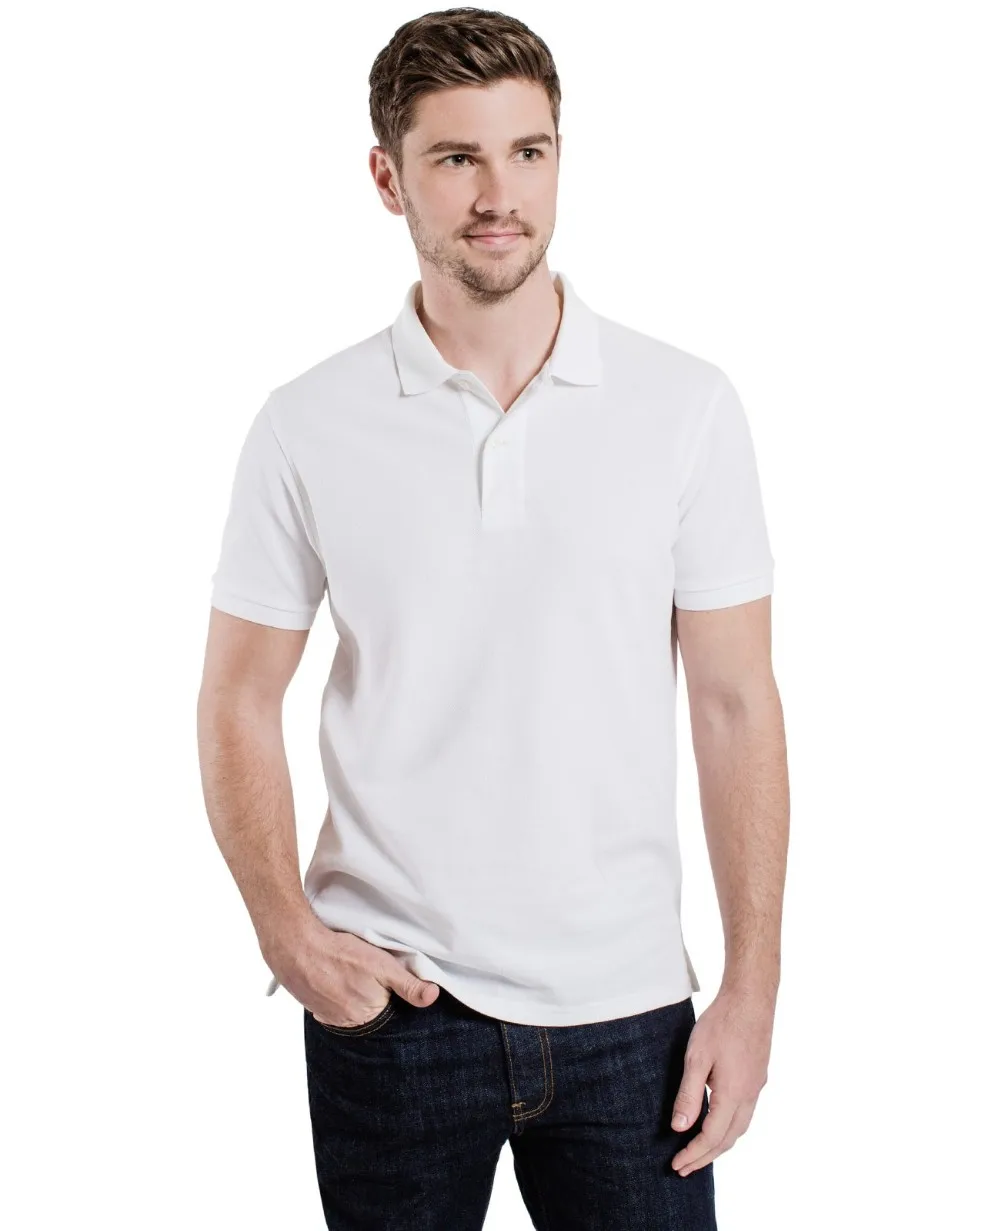 Men/'s Solid Polo Short Sleeve Shirt Pique Casual Cotton Top New Size M L XL XXL